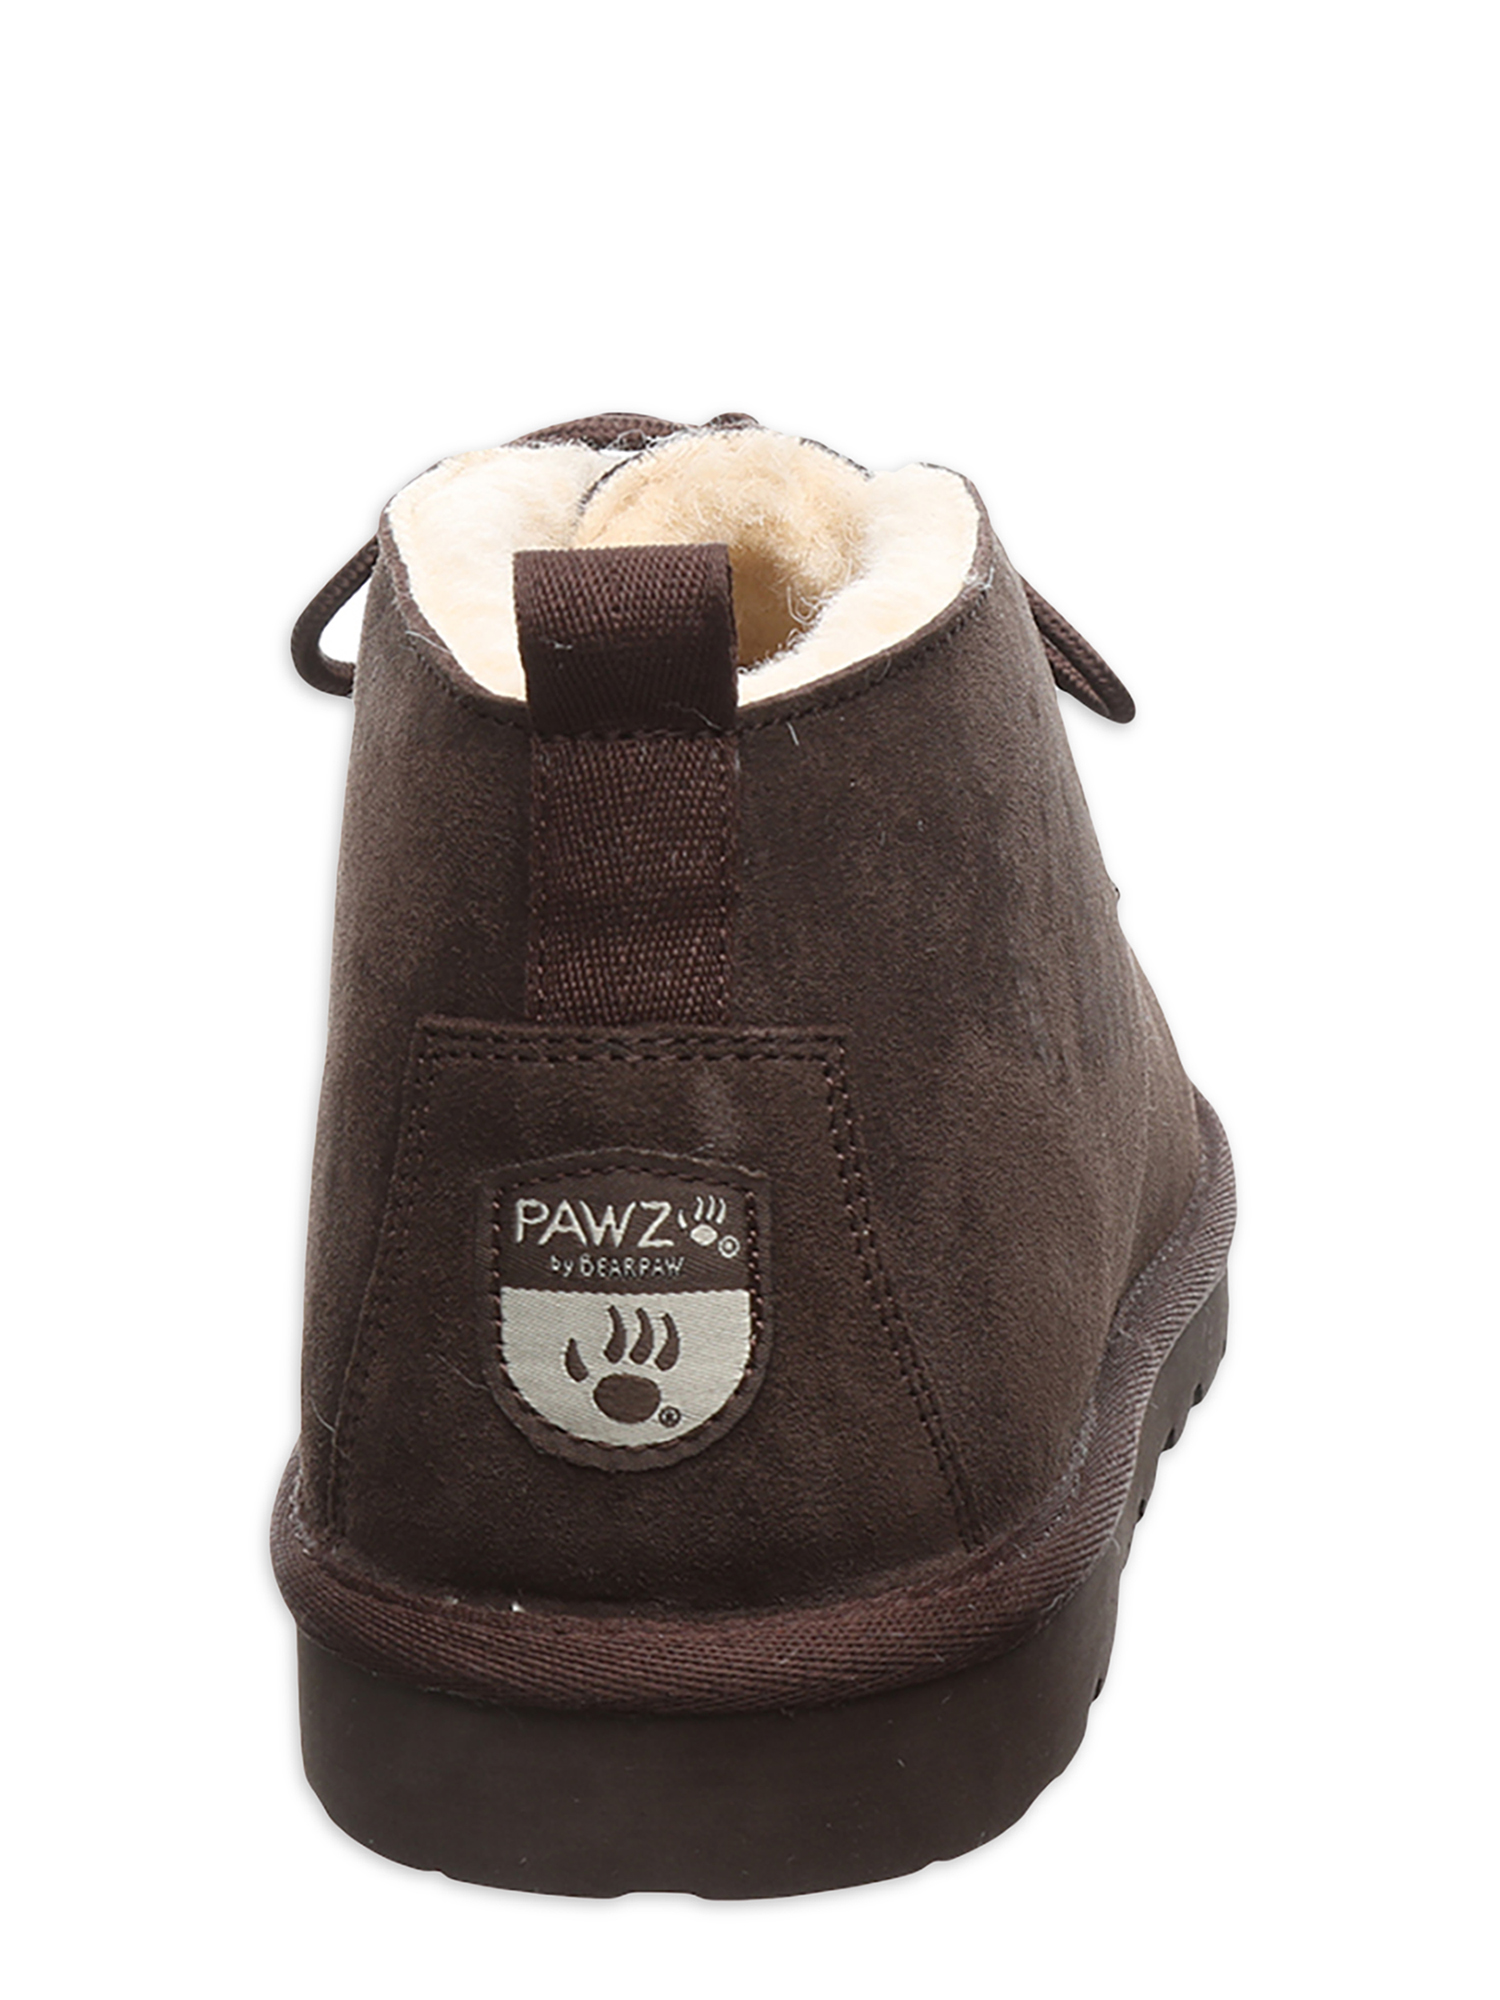 Pawz by Bearpaw Men's Gavin Chukka Bootie Slip-Ons - image 3 of 5